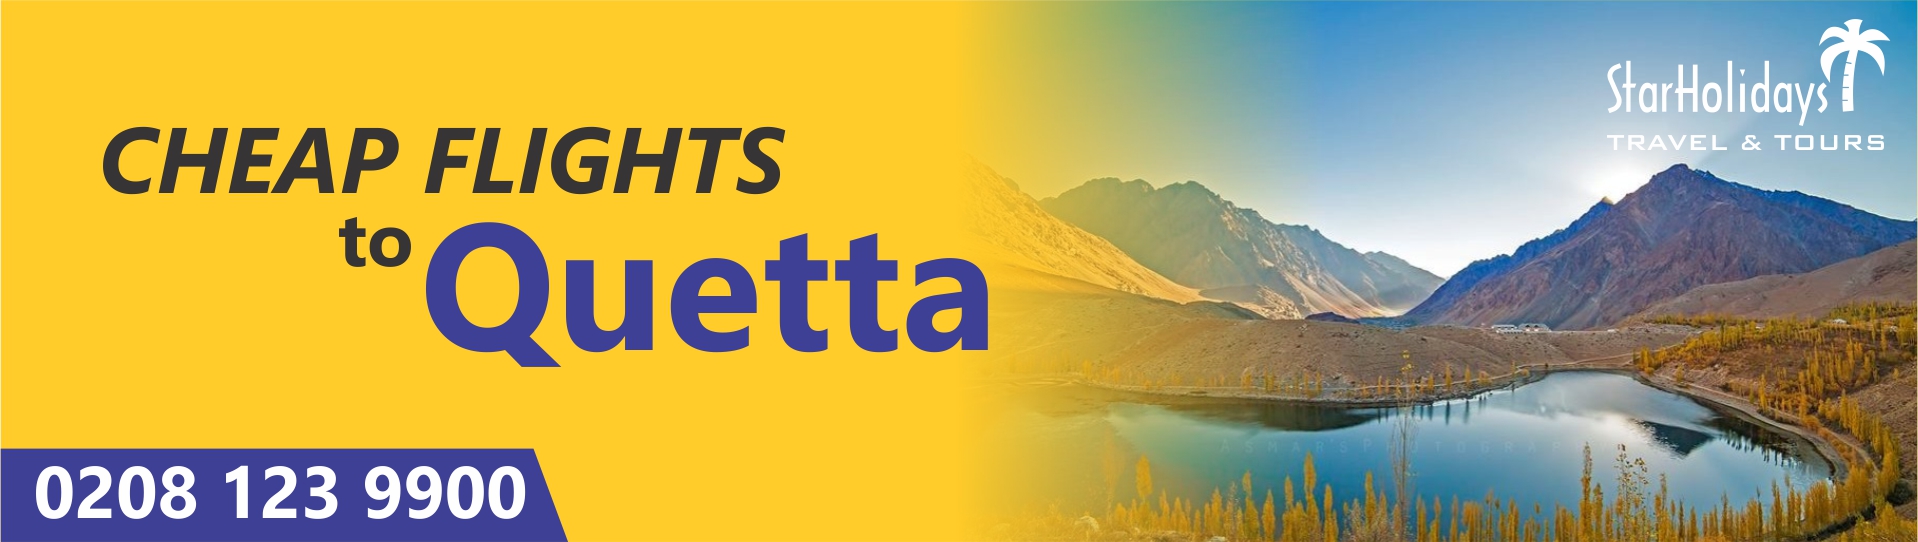 Cheap Flights to Quetta